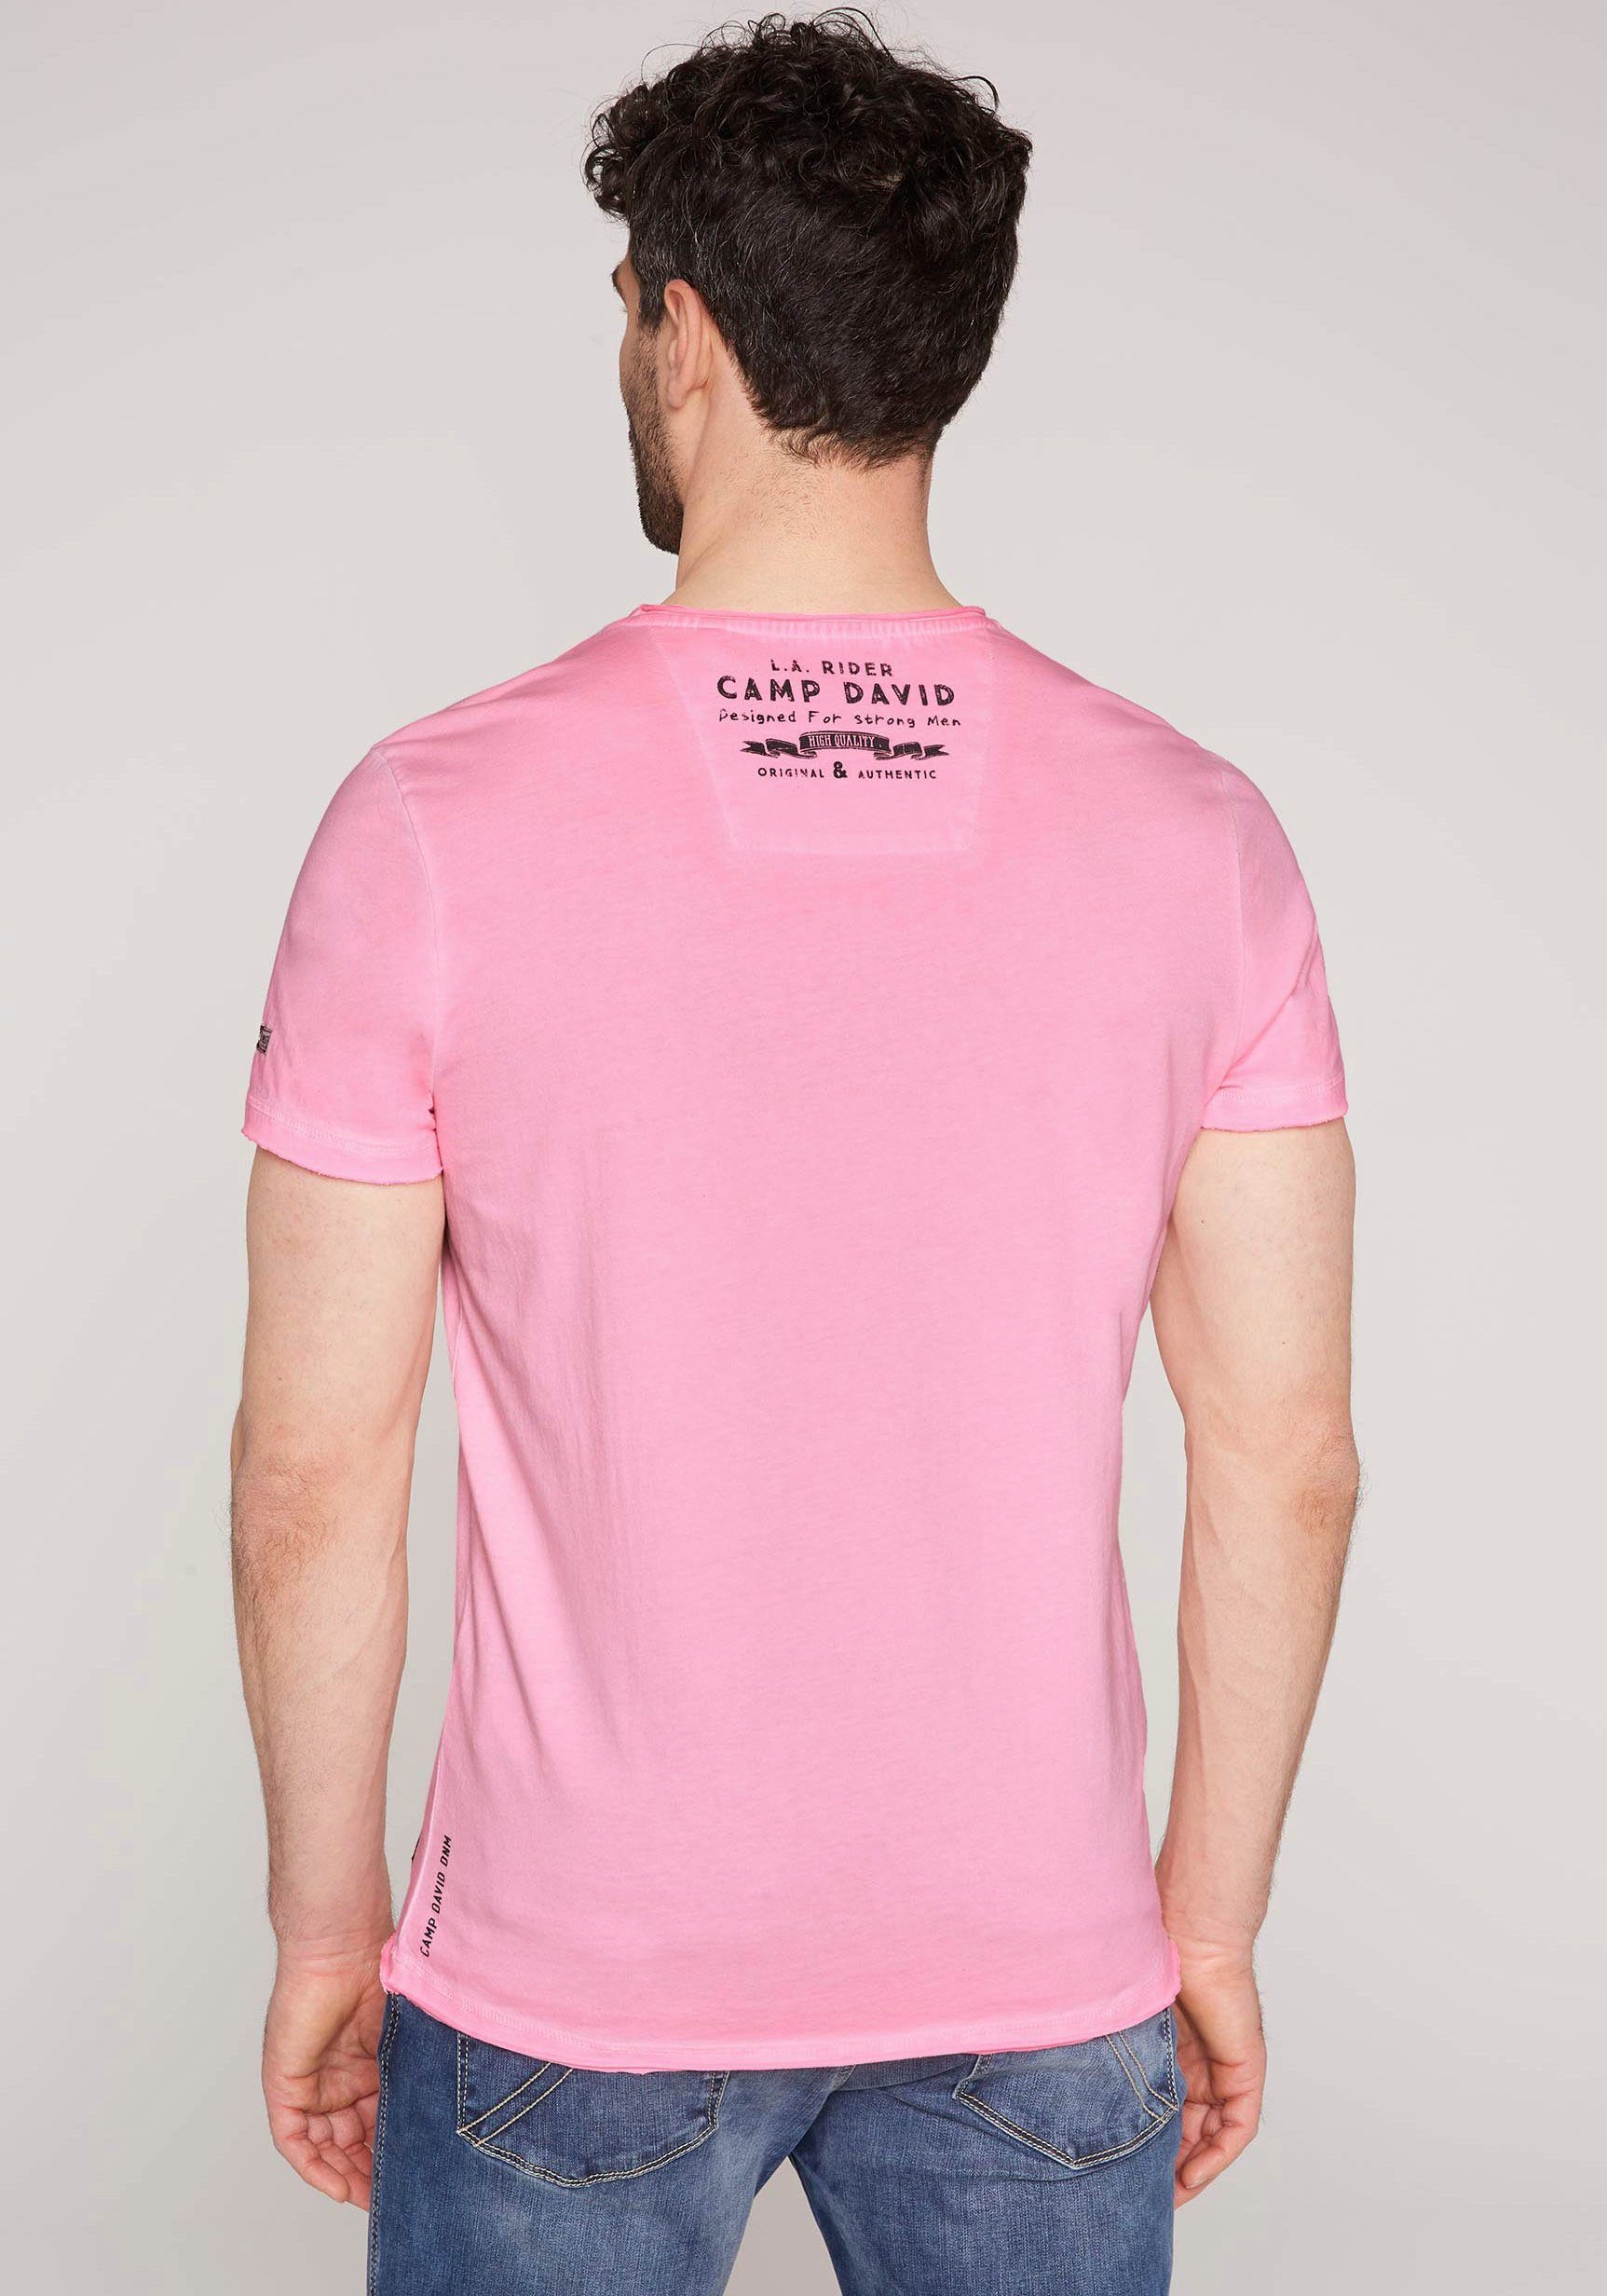 T-Shirt pink DAVID neon CAMP